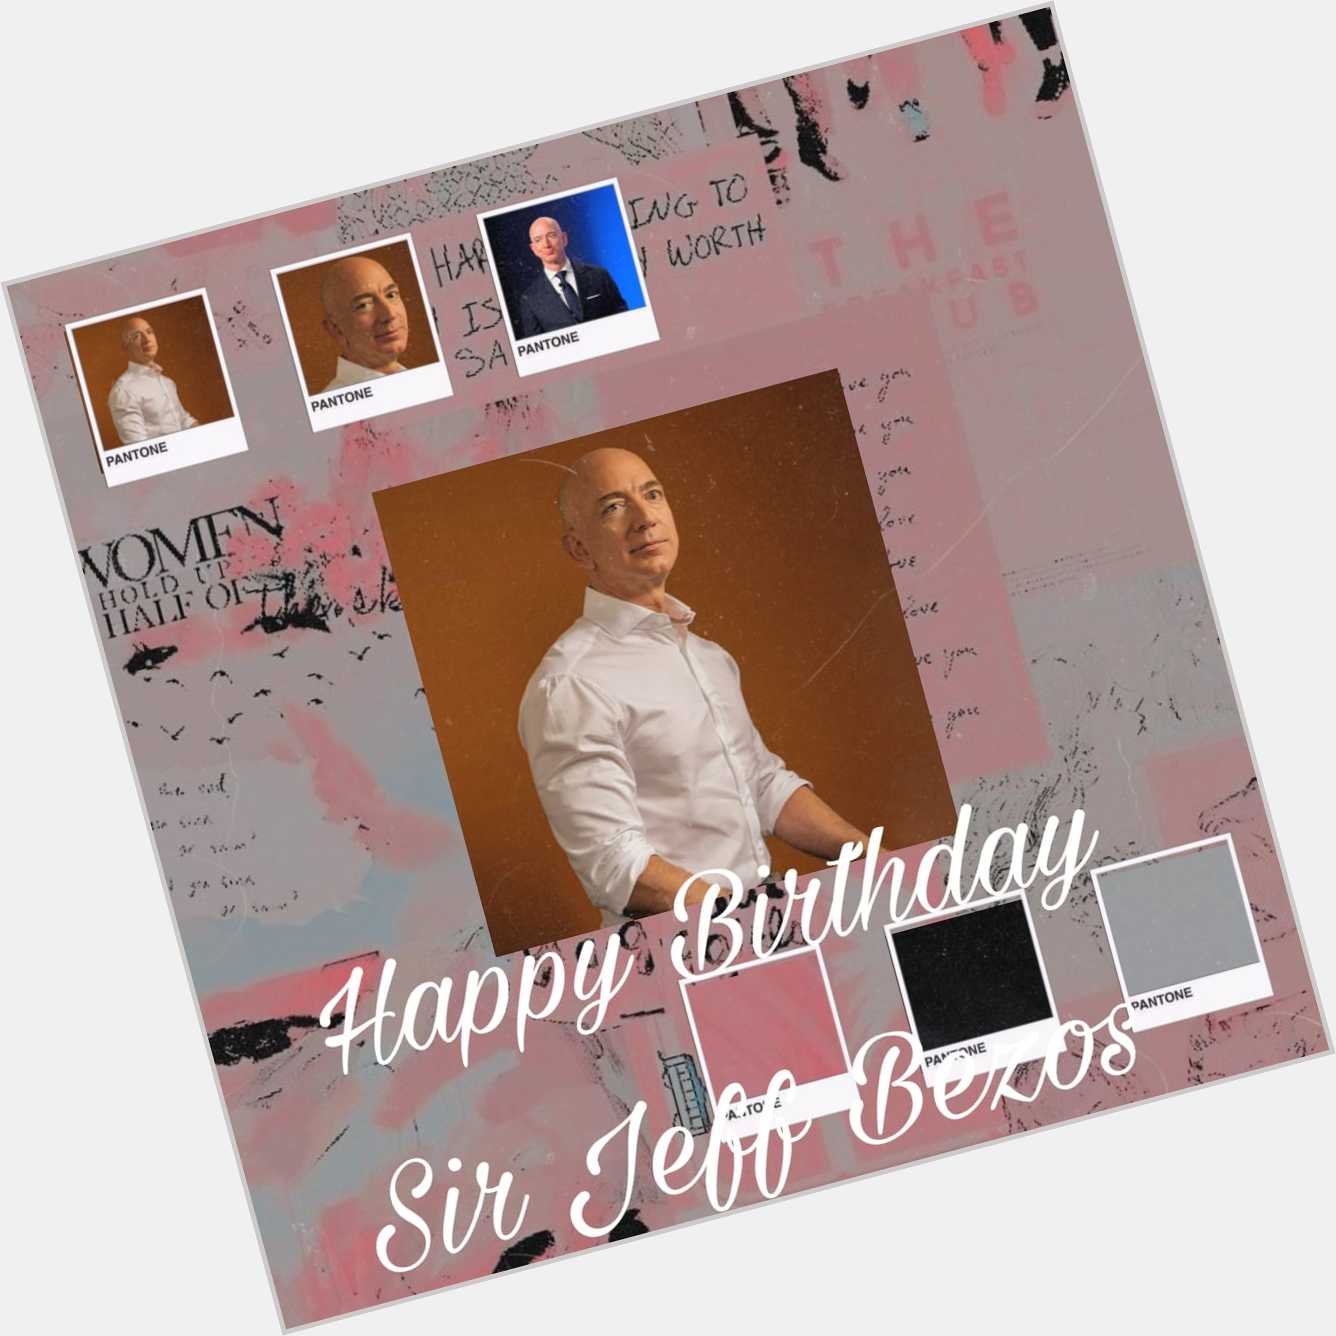 Happy Birthday 
Sir Jeff Bezos   